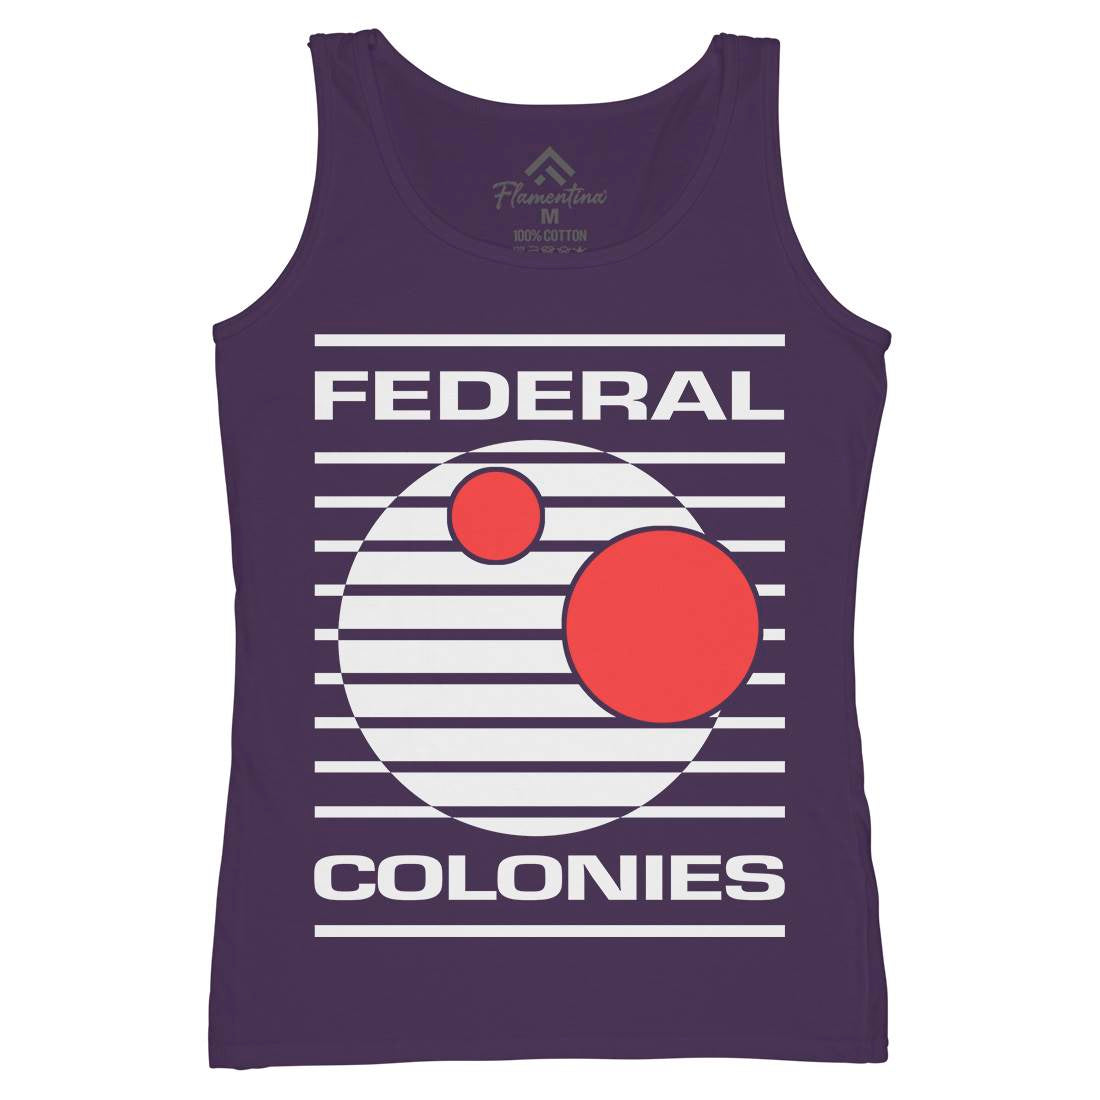 Federal Colonies Womens Organic Tank Top Vest Space D409